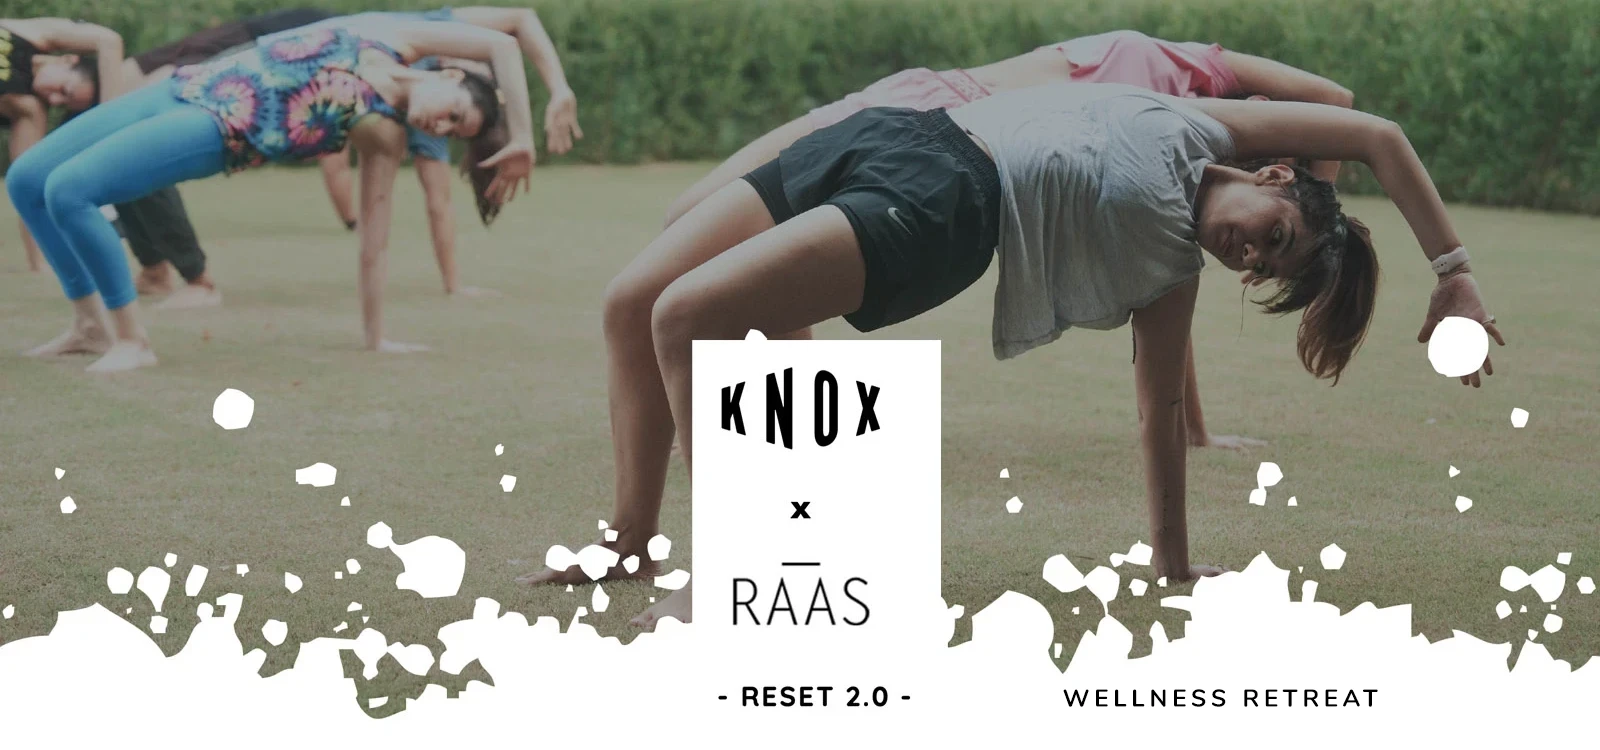 Reset 2.0 Wellness Retreat with KNOX